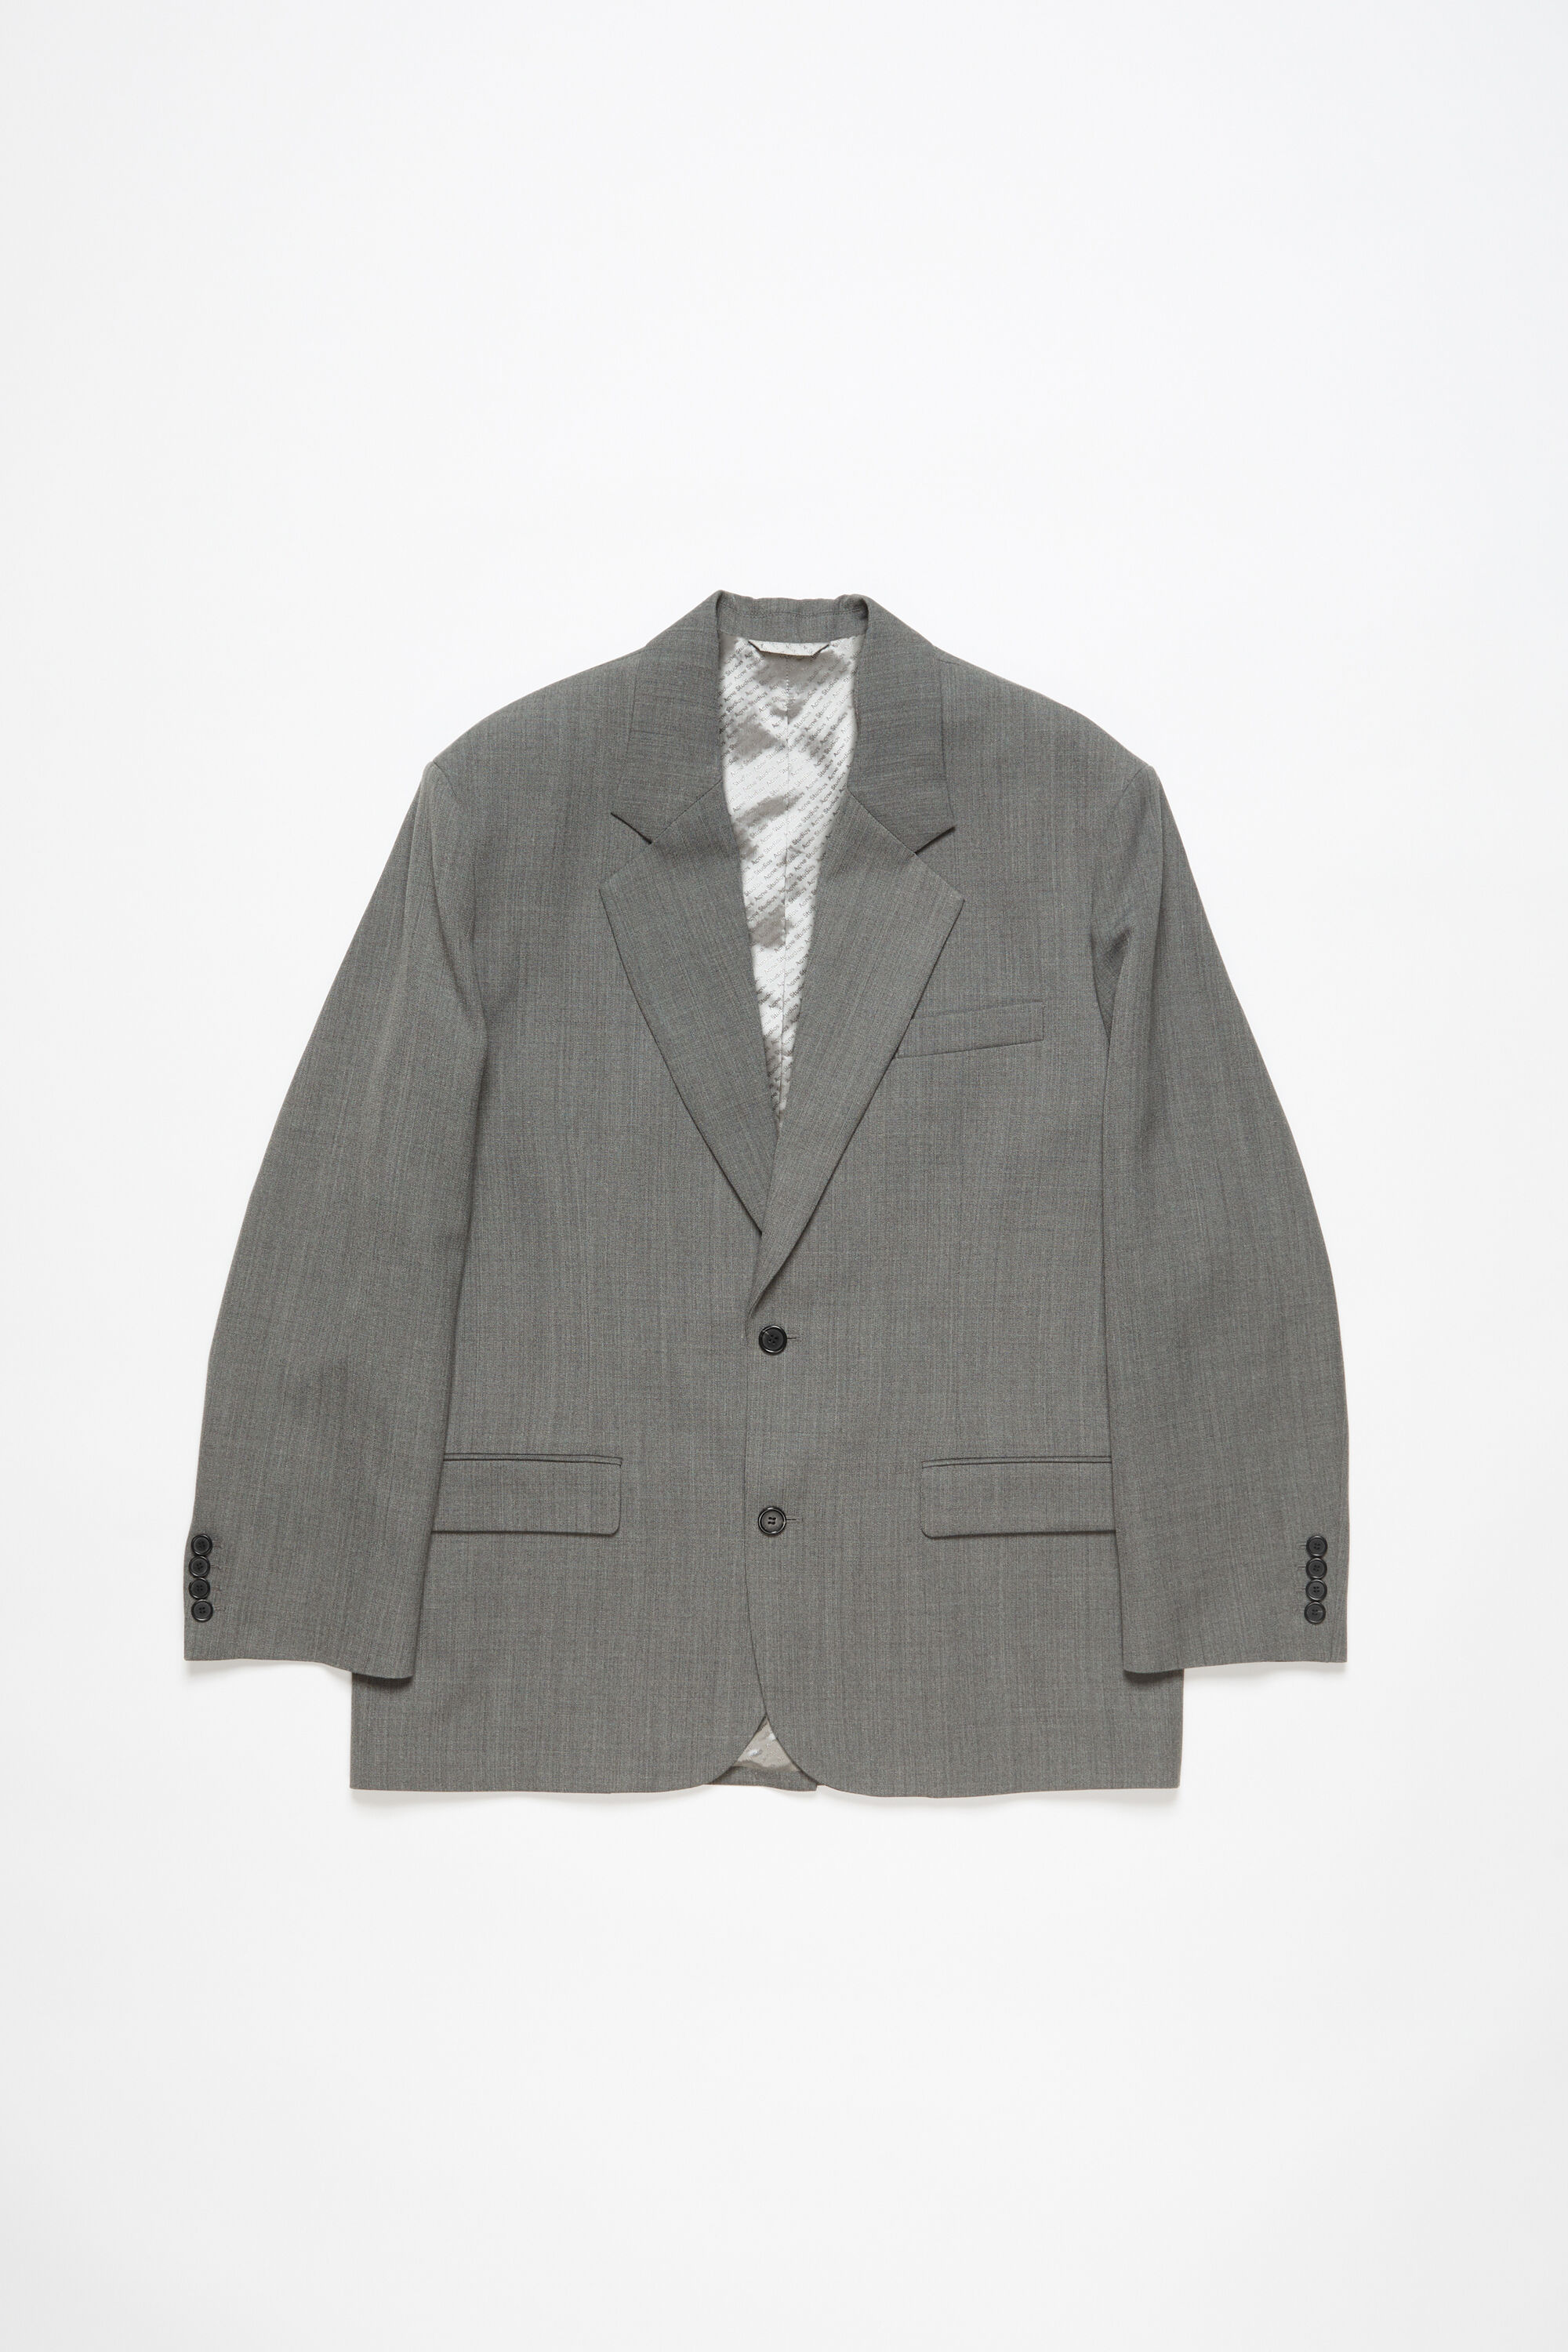 Acne Studios - Relaxed fit suit jacket - Grey Melange